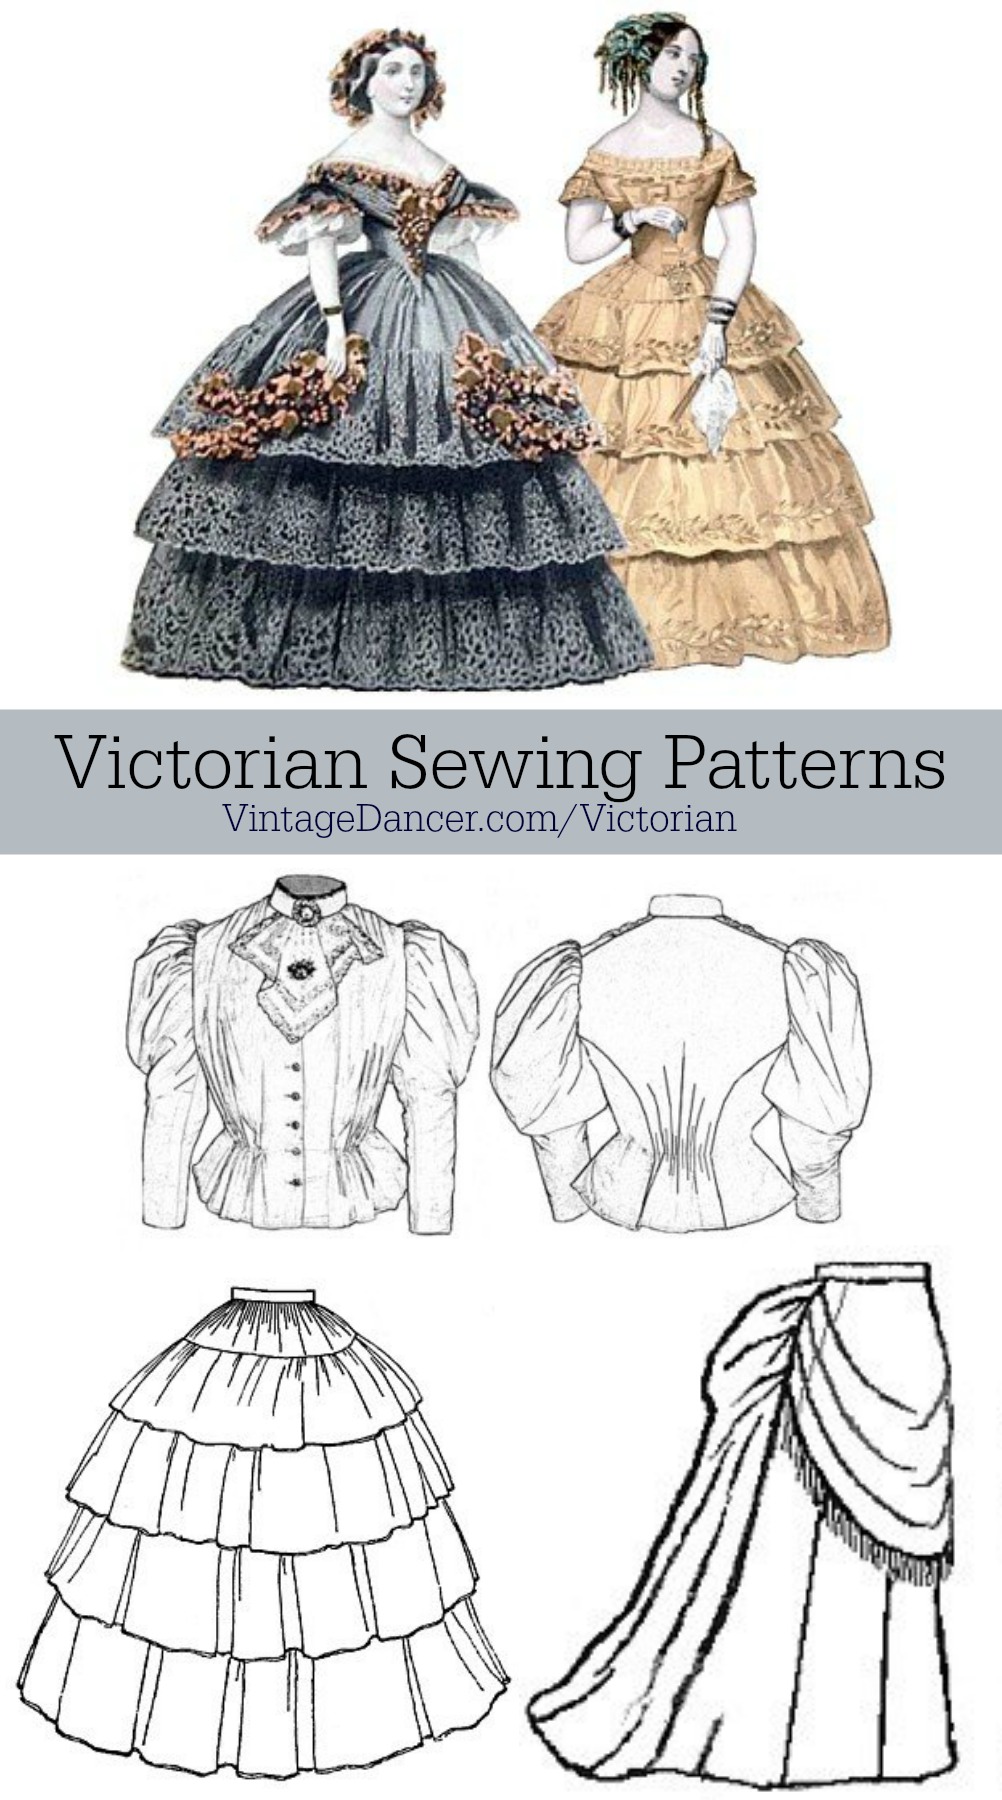 Corset Sewing Pattern, PDF Digital Download, Steampunk Pattern, Size Extra  Large 38 40 42, Plus Sized Sewing, 